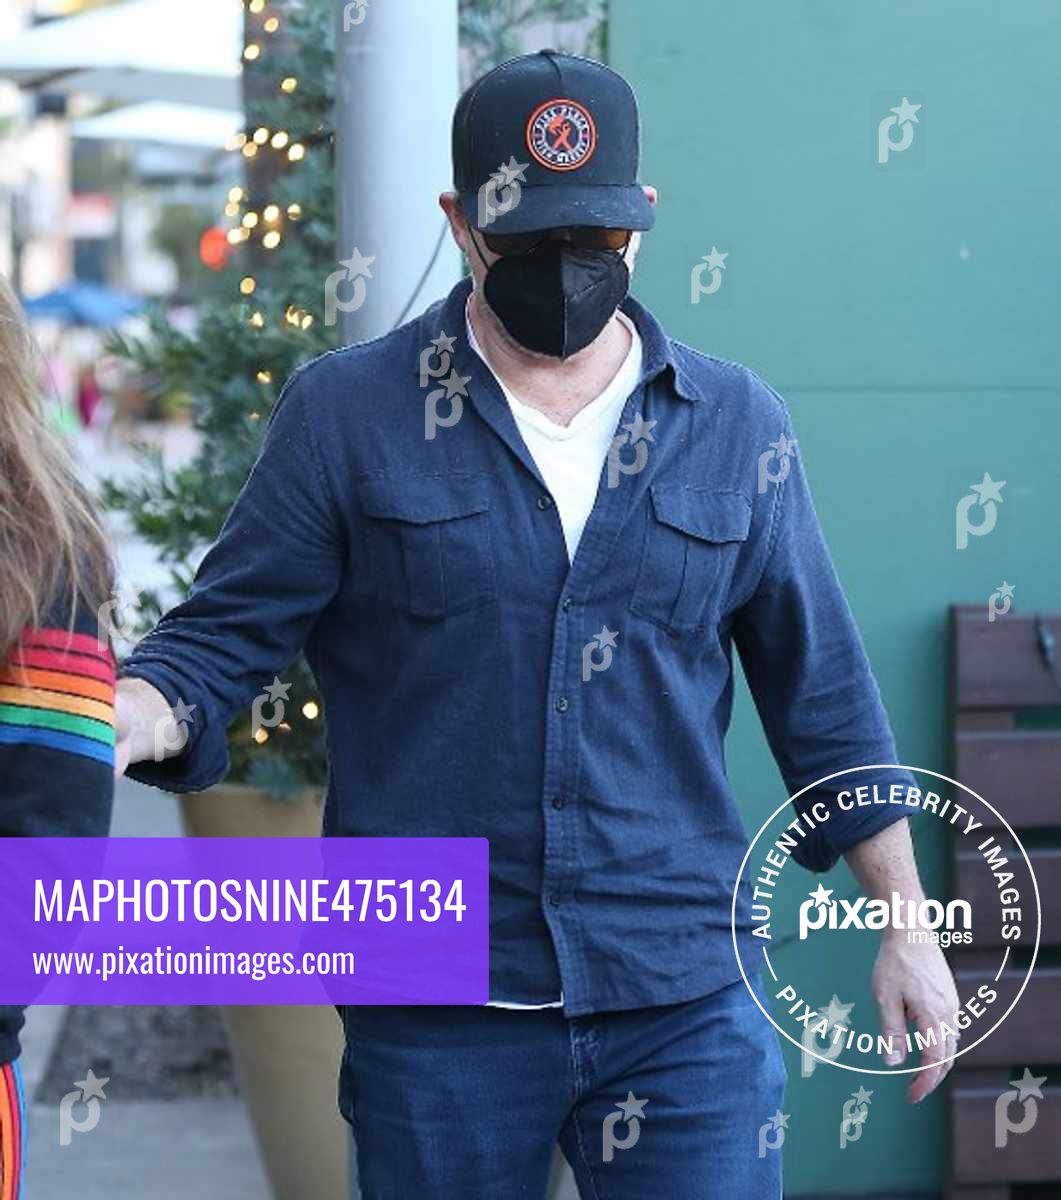 Actor Matt Damon runnign errands in Los Angeles